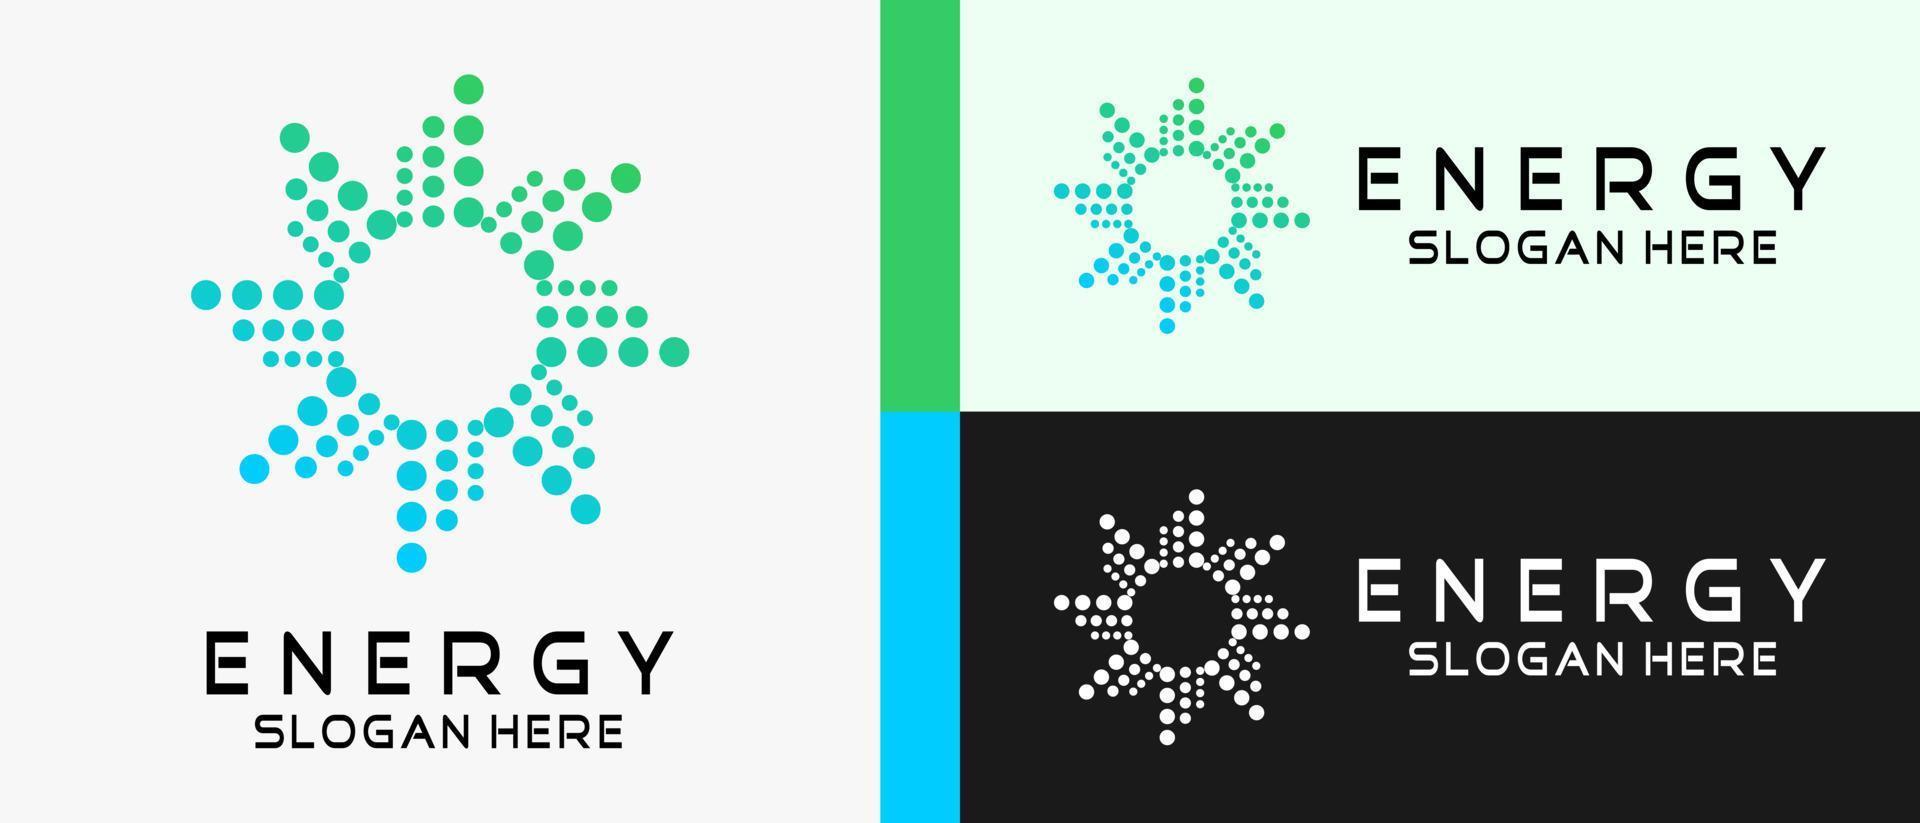 energy logo design template with rotating point element concept. premium vector logo illustration